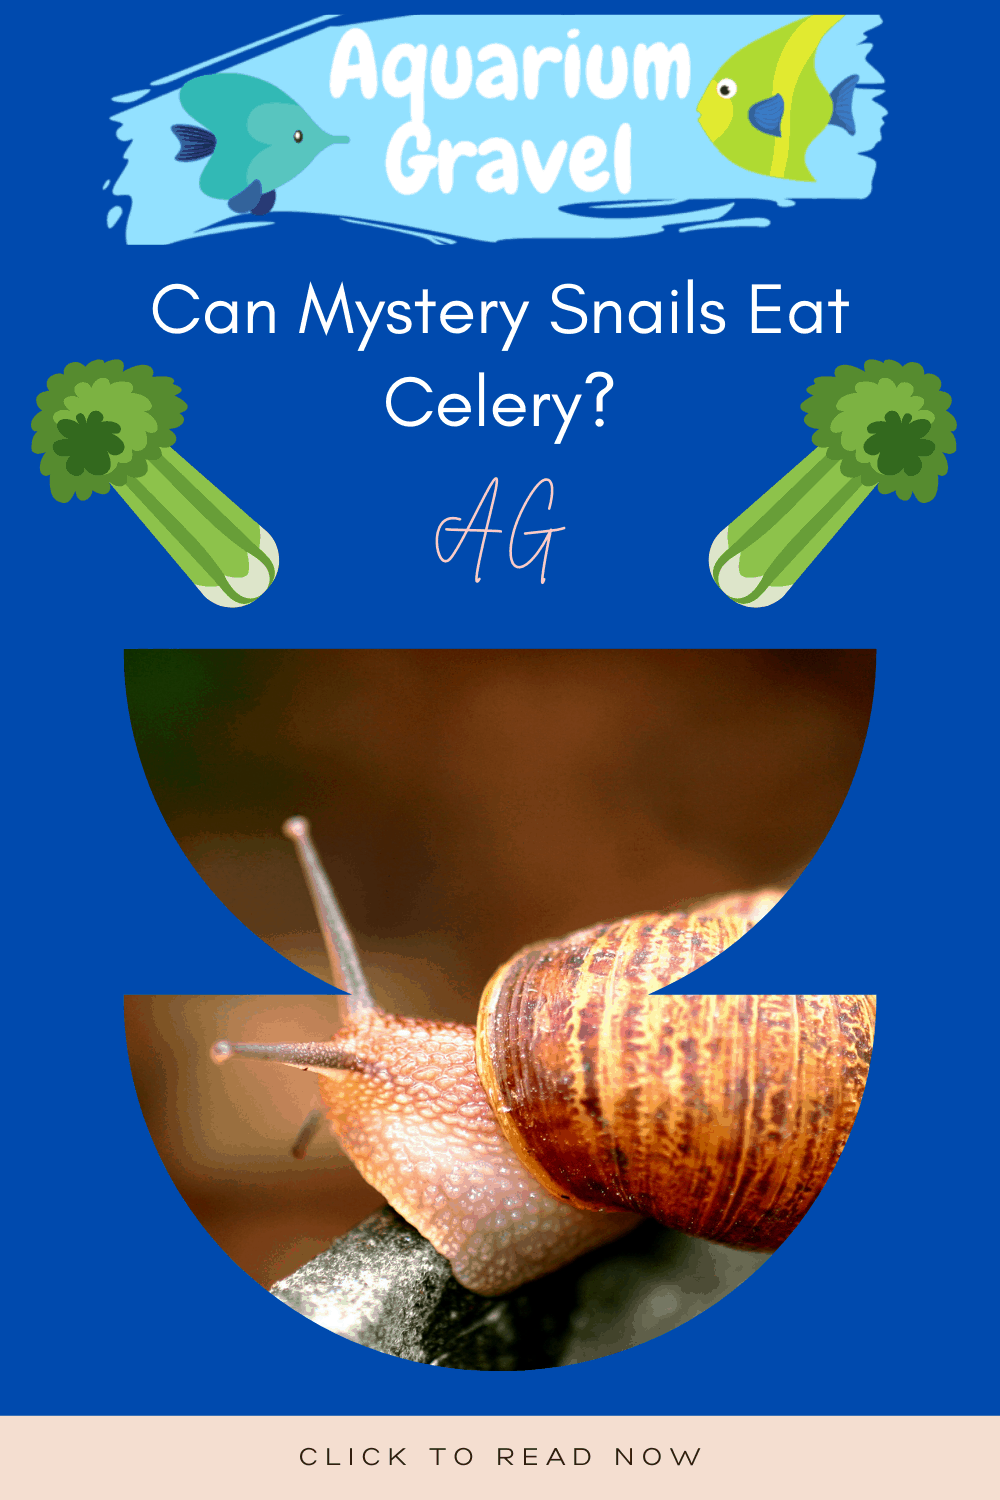 Can Mystery Snails Eat Celery?